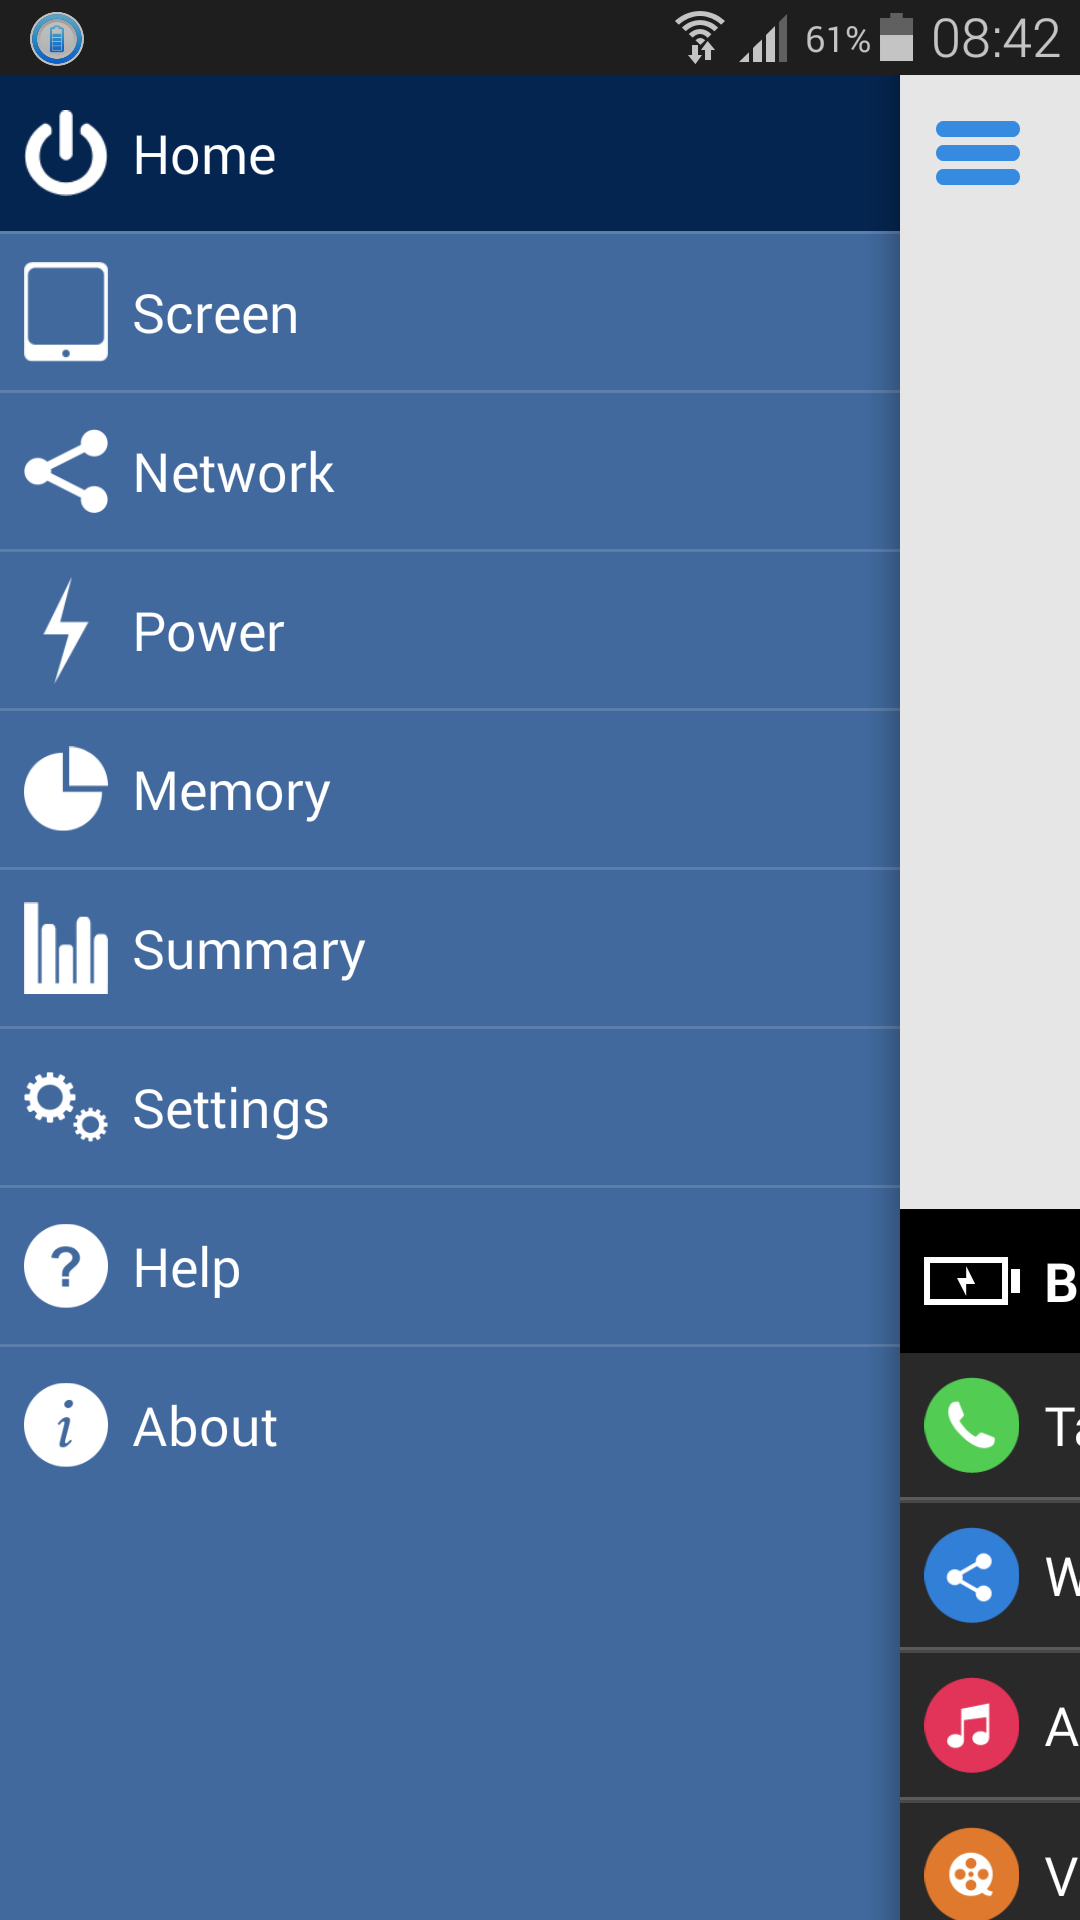 Android application Savee: Battery Saver Optimizer screenshort